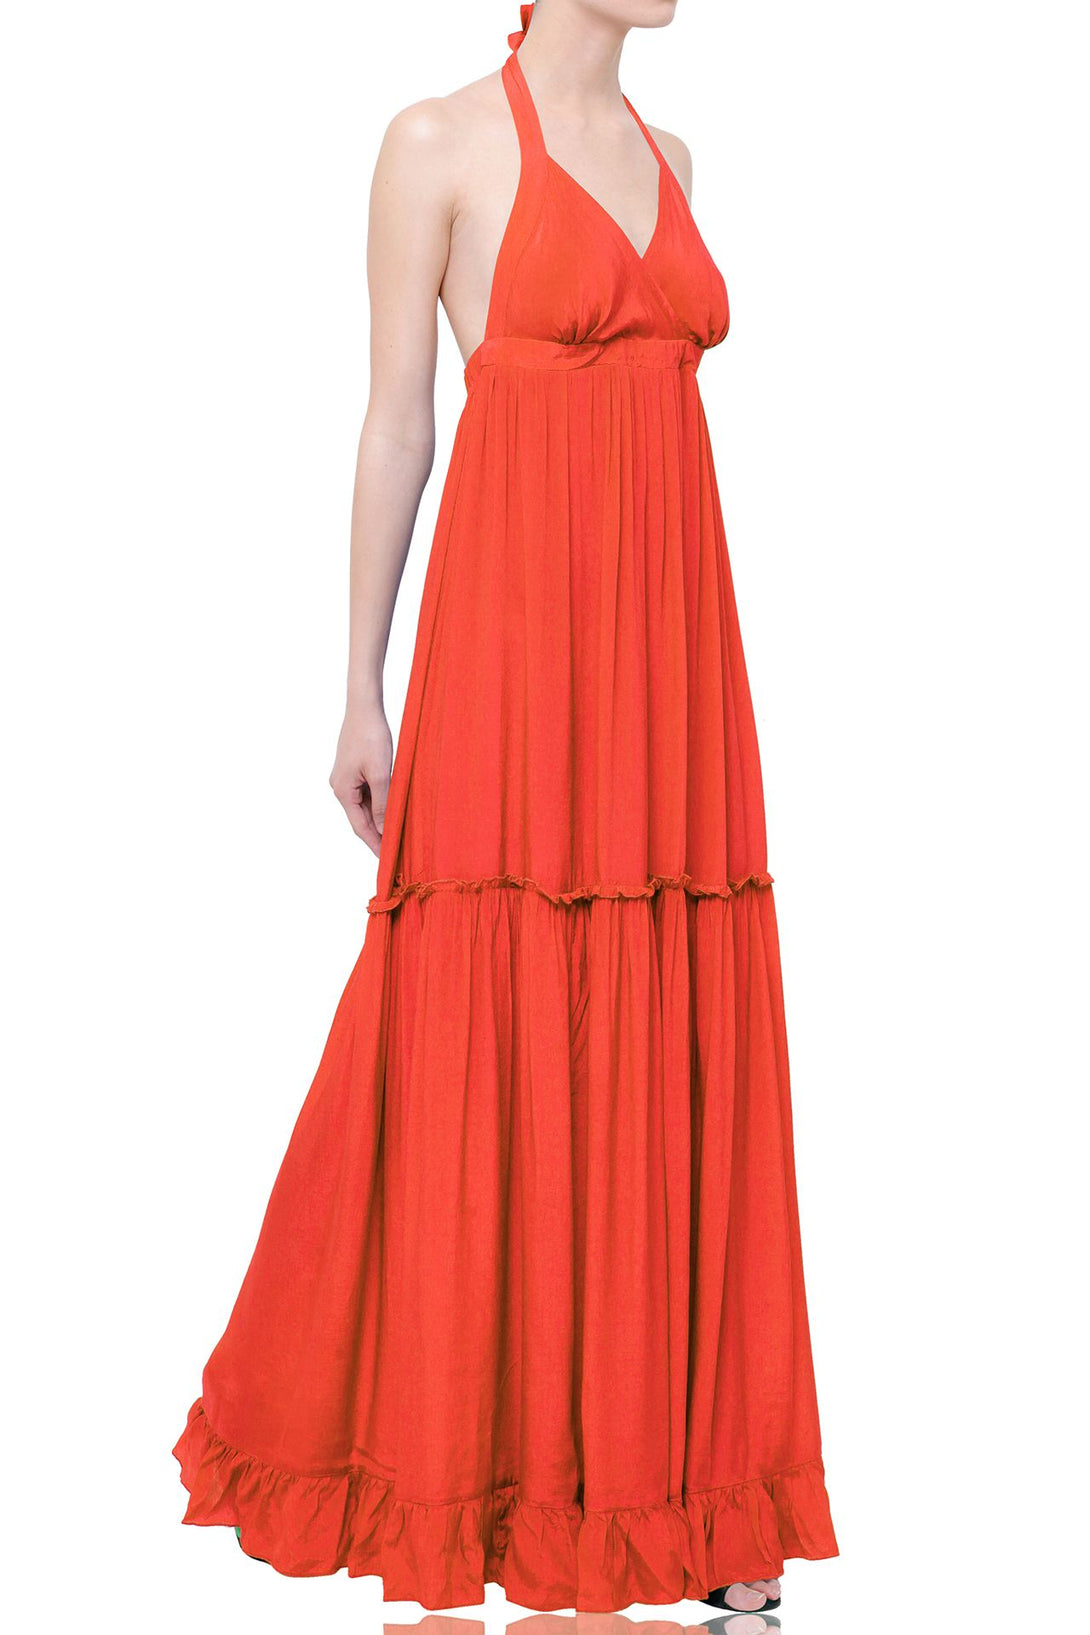  burnt orange long formal dresses, long dresses for women, flowy maxi dress, infinity plus size dress,